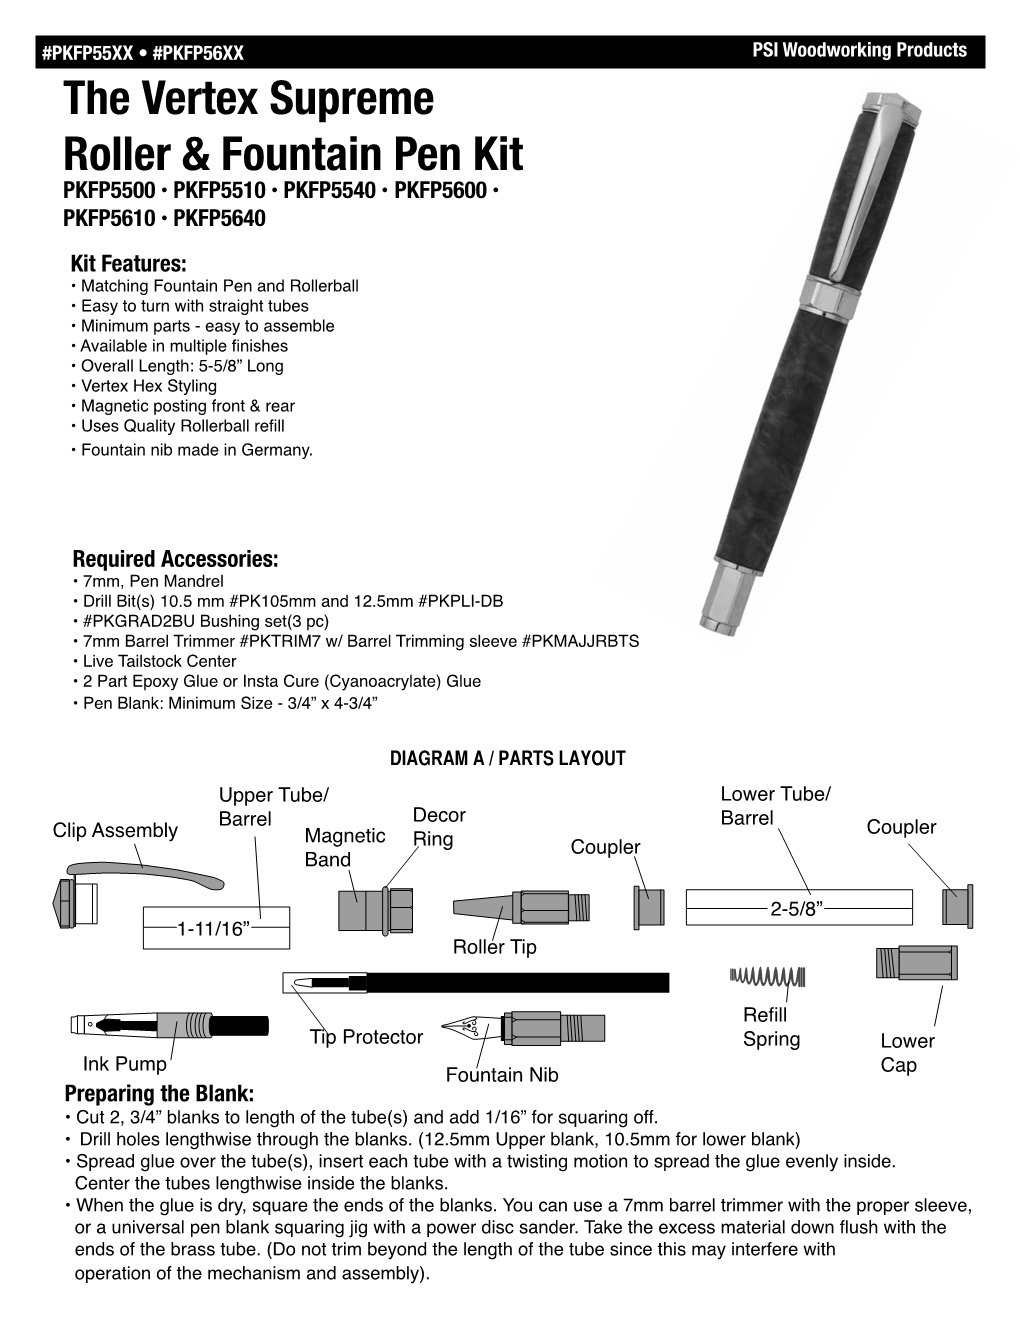 The Vertex Supreme Roller & Fountain Pen